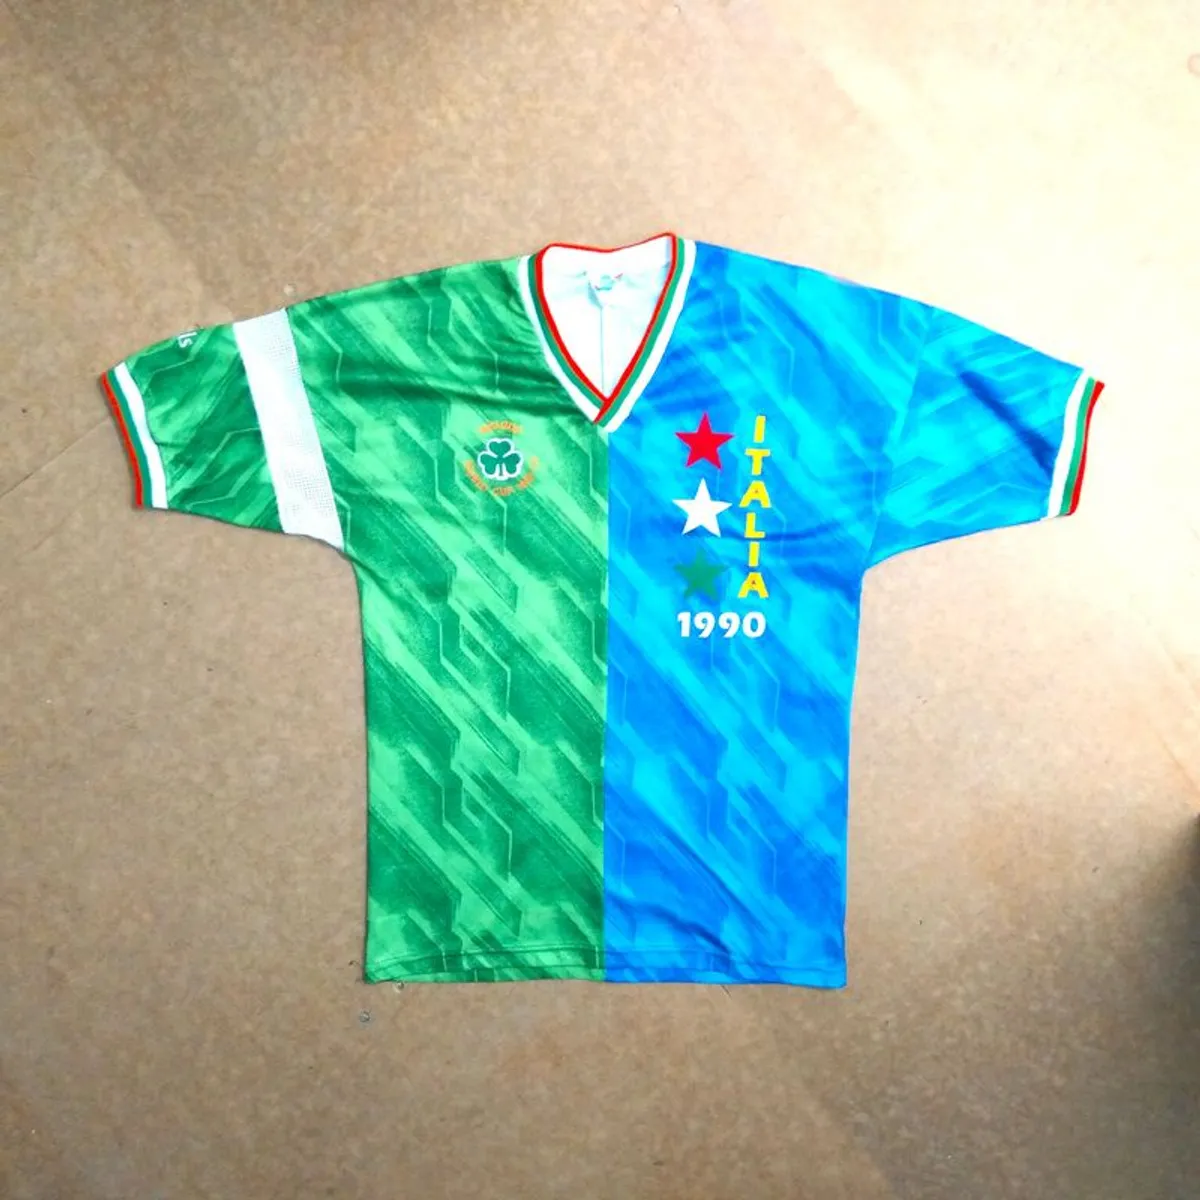 FREE POST Italia 90 Republic of Ireland (S) Jersey Shirt O'Neills  Vintage Retro Soccer Football Eire Irish 90 Half Small